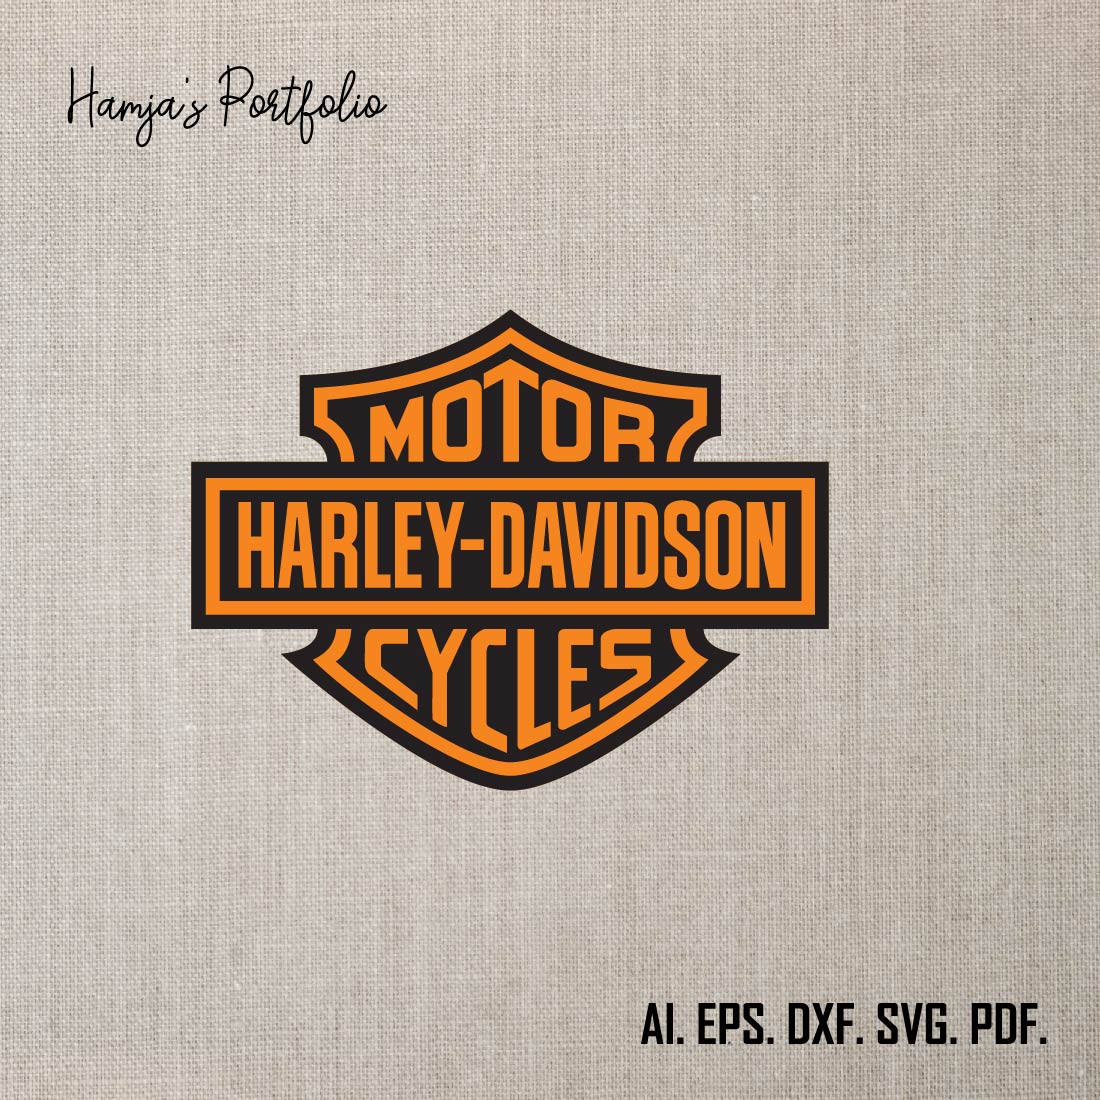 Harley Davidson, Harley Davidson SVG, Harley Davidson PNG, Harley Davidson logo, Harley Davidson, Harley Davidson cricut preview image.